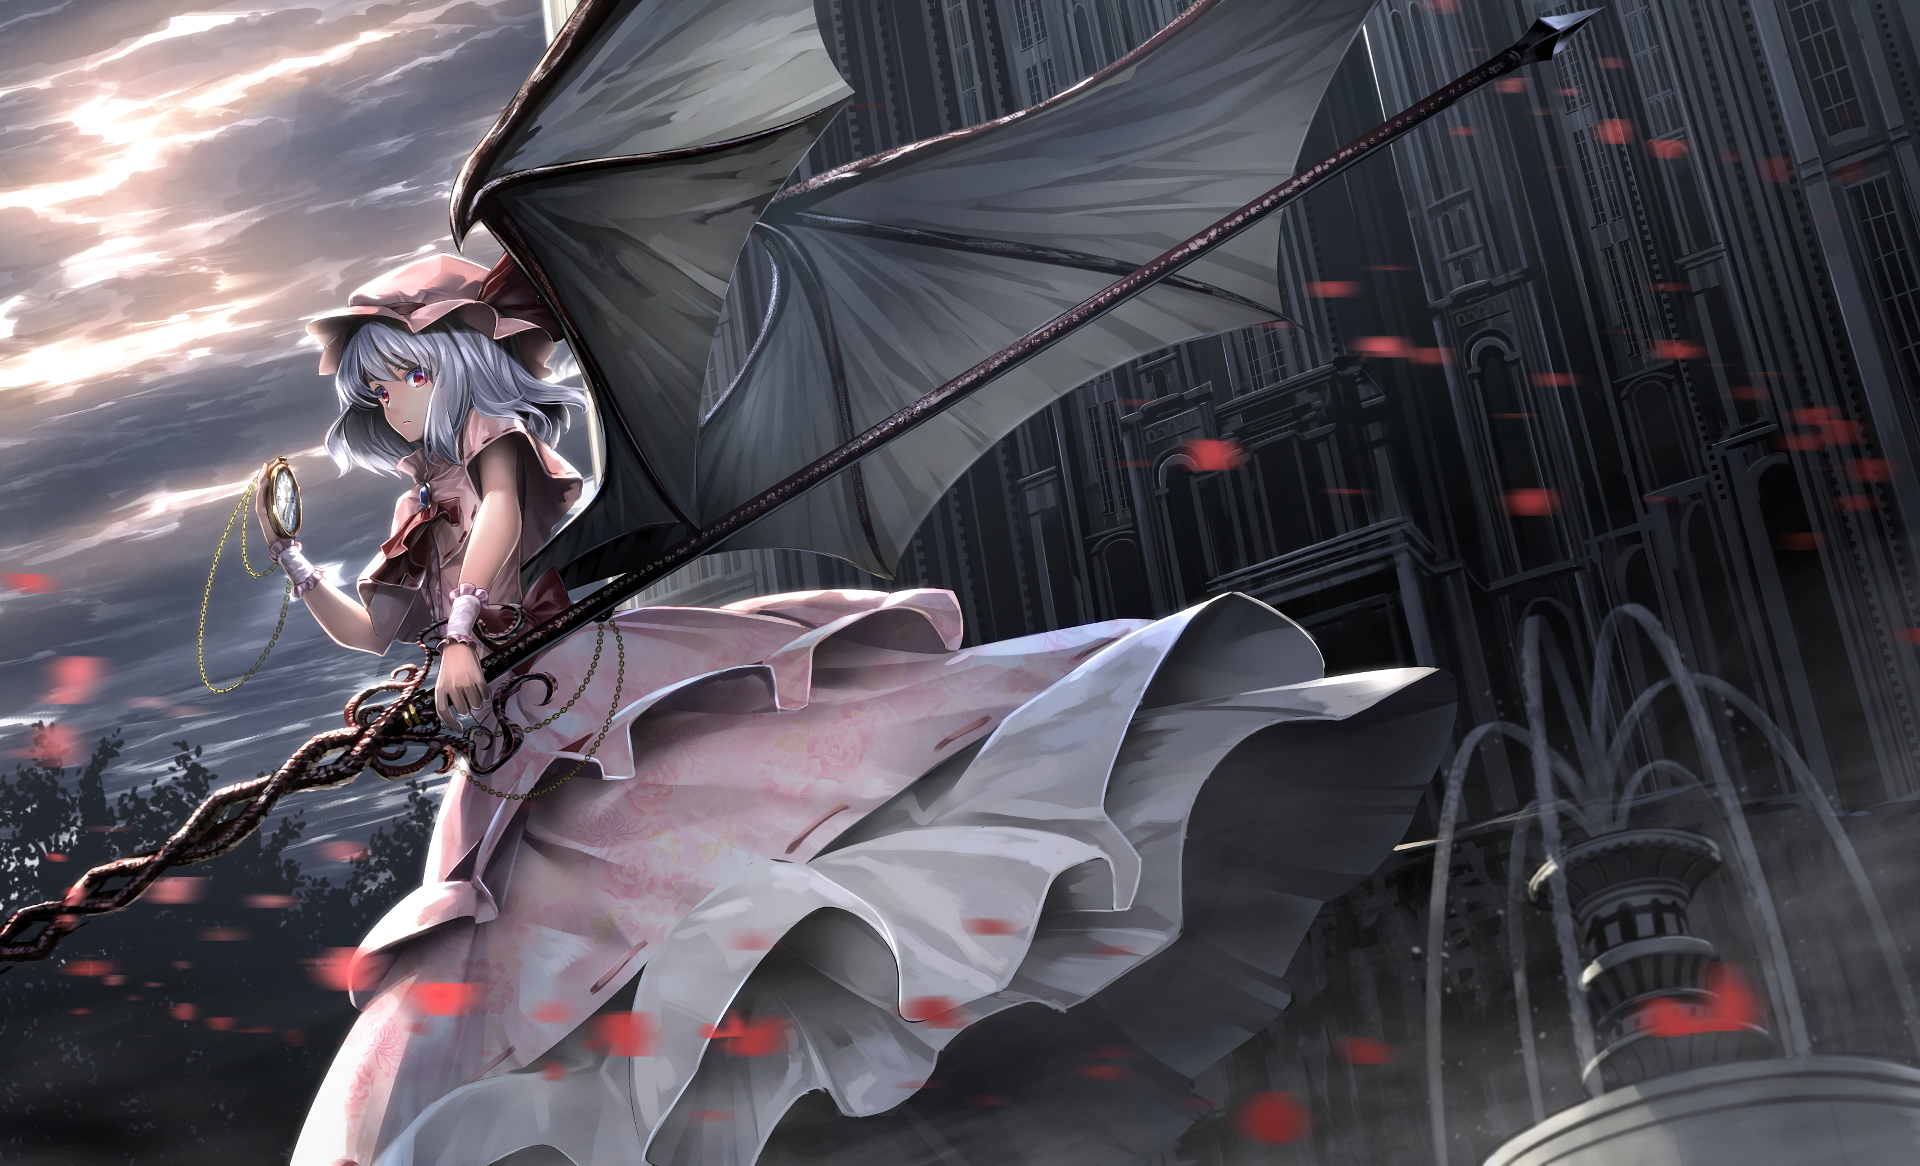 Anime girl devil tail and bat wings anime 317319 on animeshercom